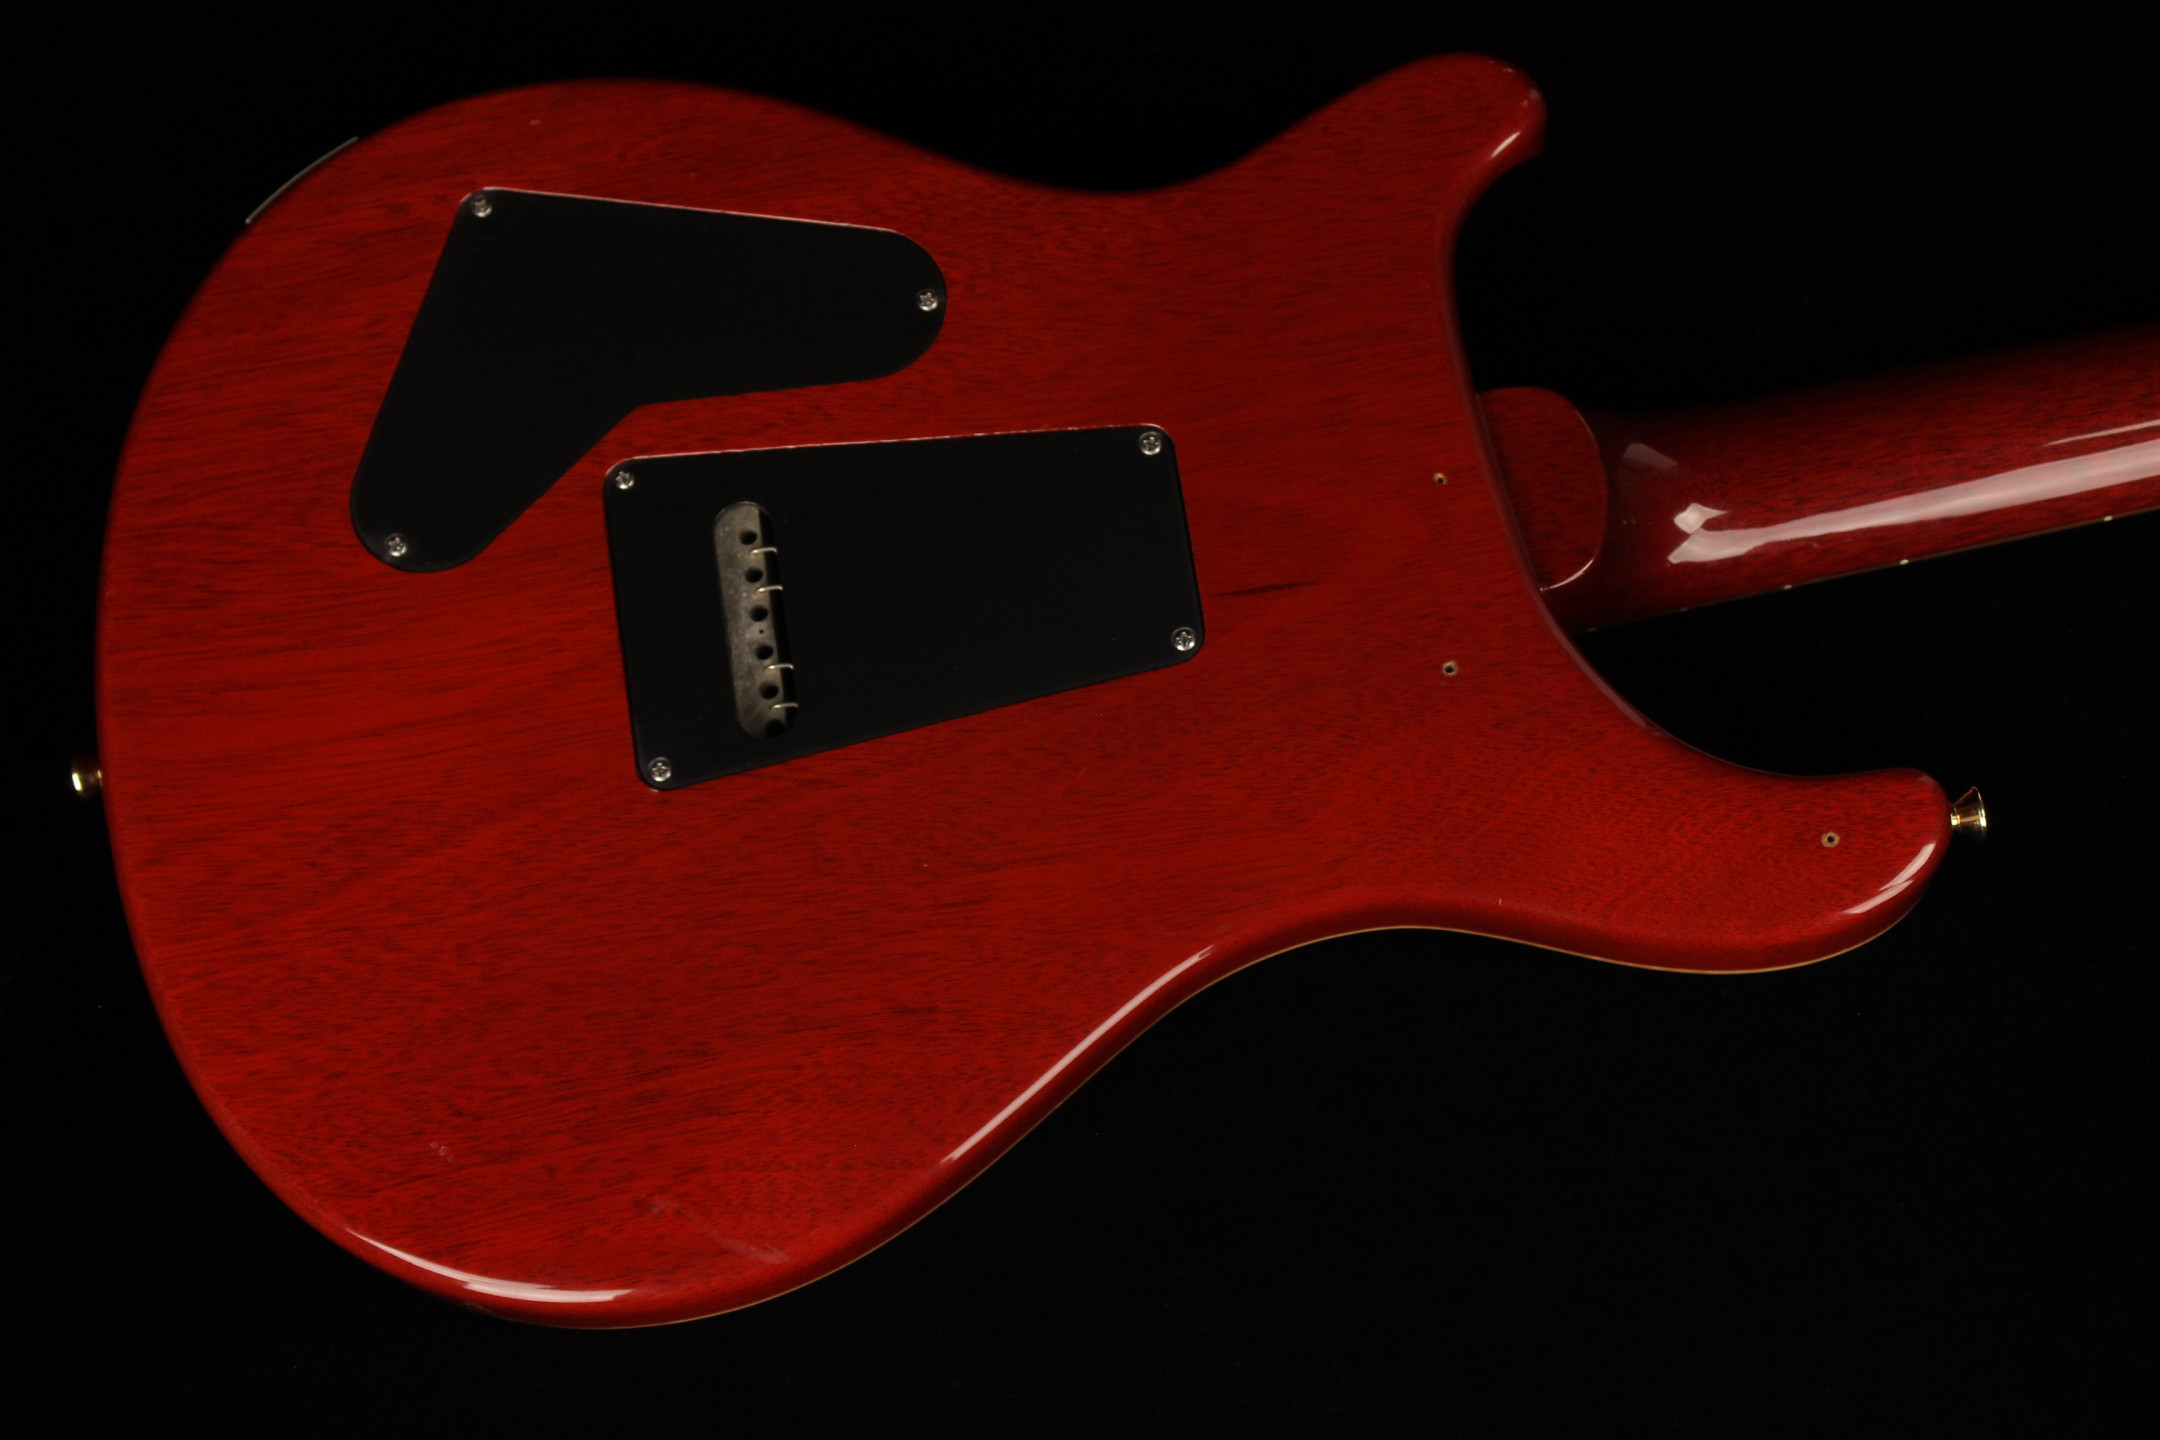 Paul Reed Smith Custom 24 Vintage Yellow Sn 08565 Gino Guitars